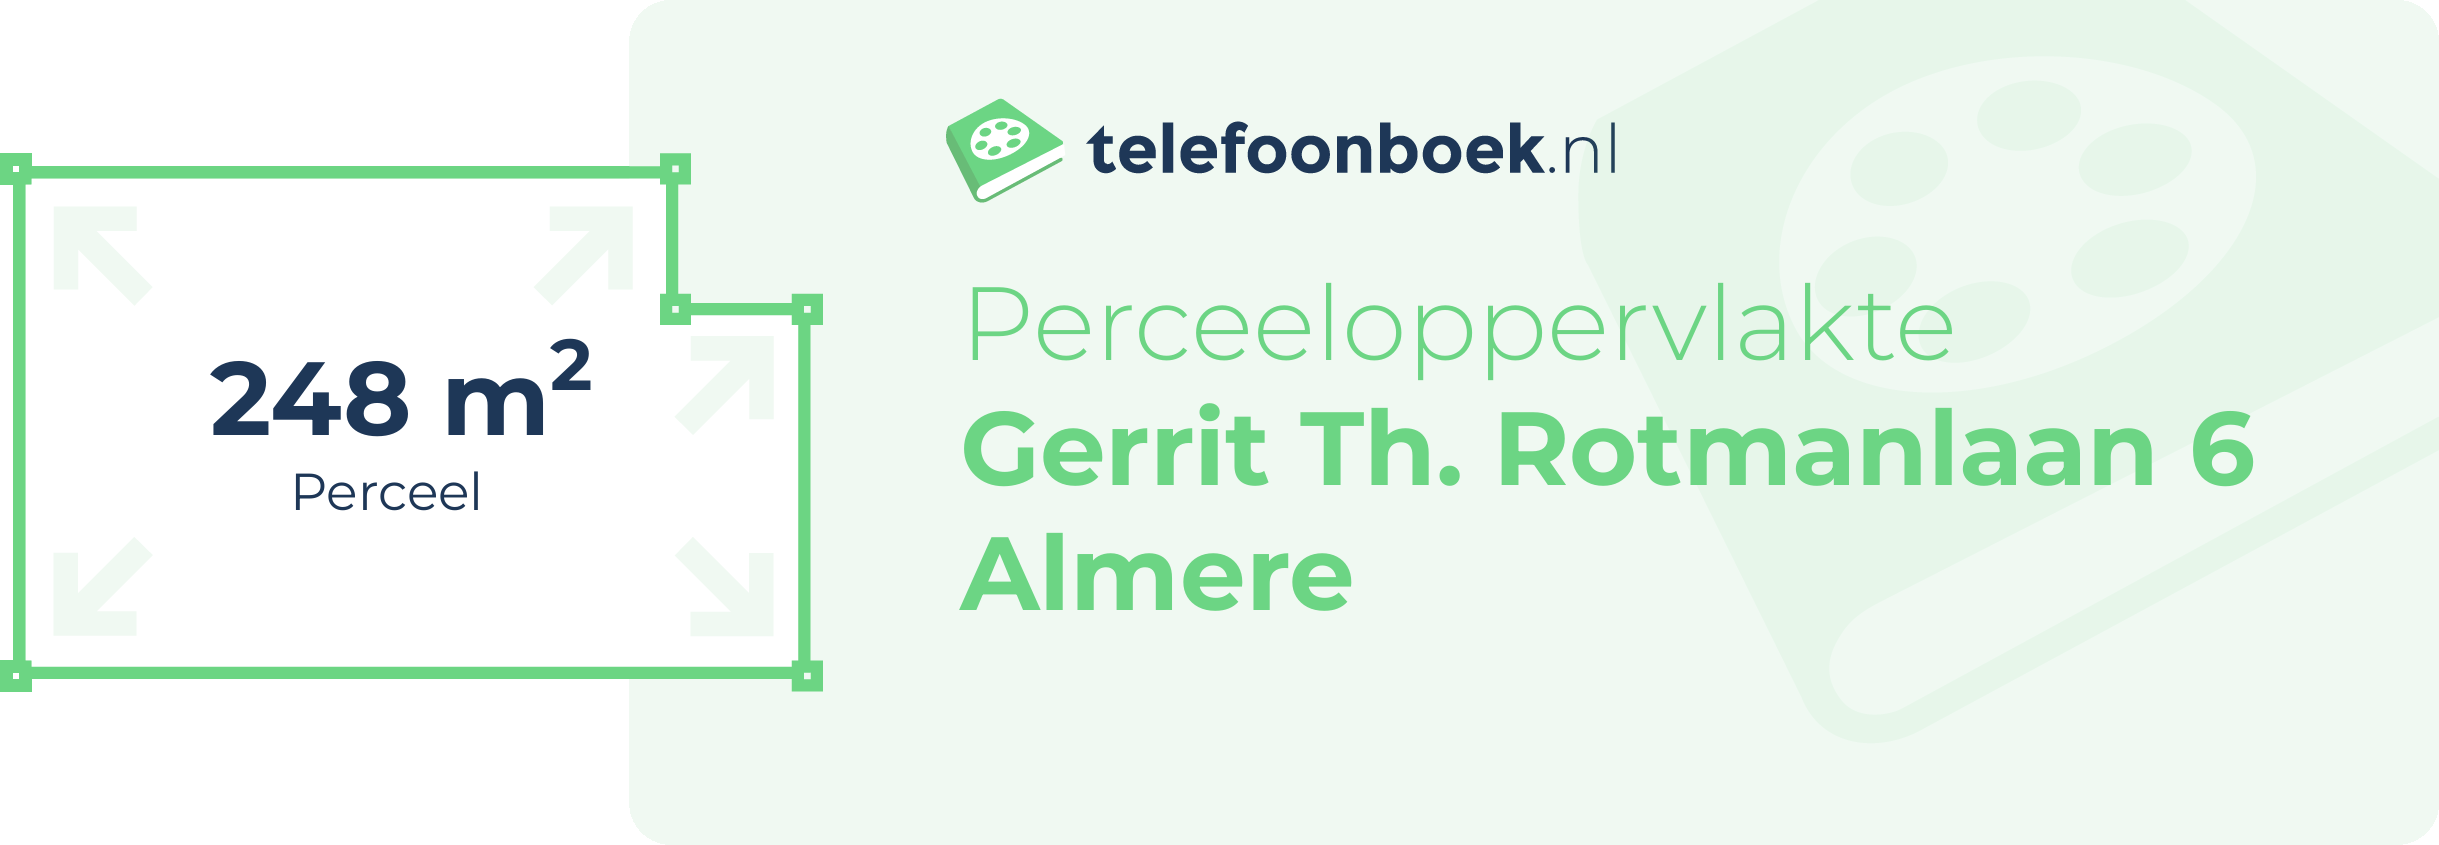 Perceeloppervlakte Gerrit Th. Rotmanlaan 6 Almere